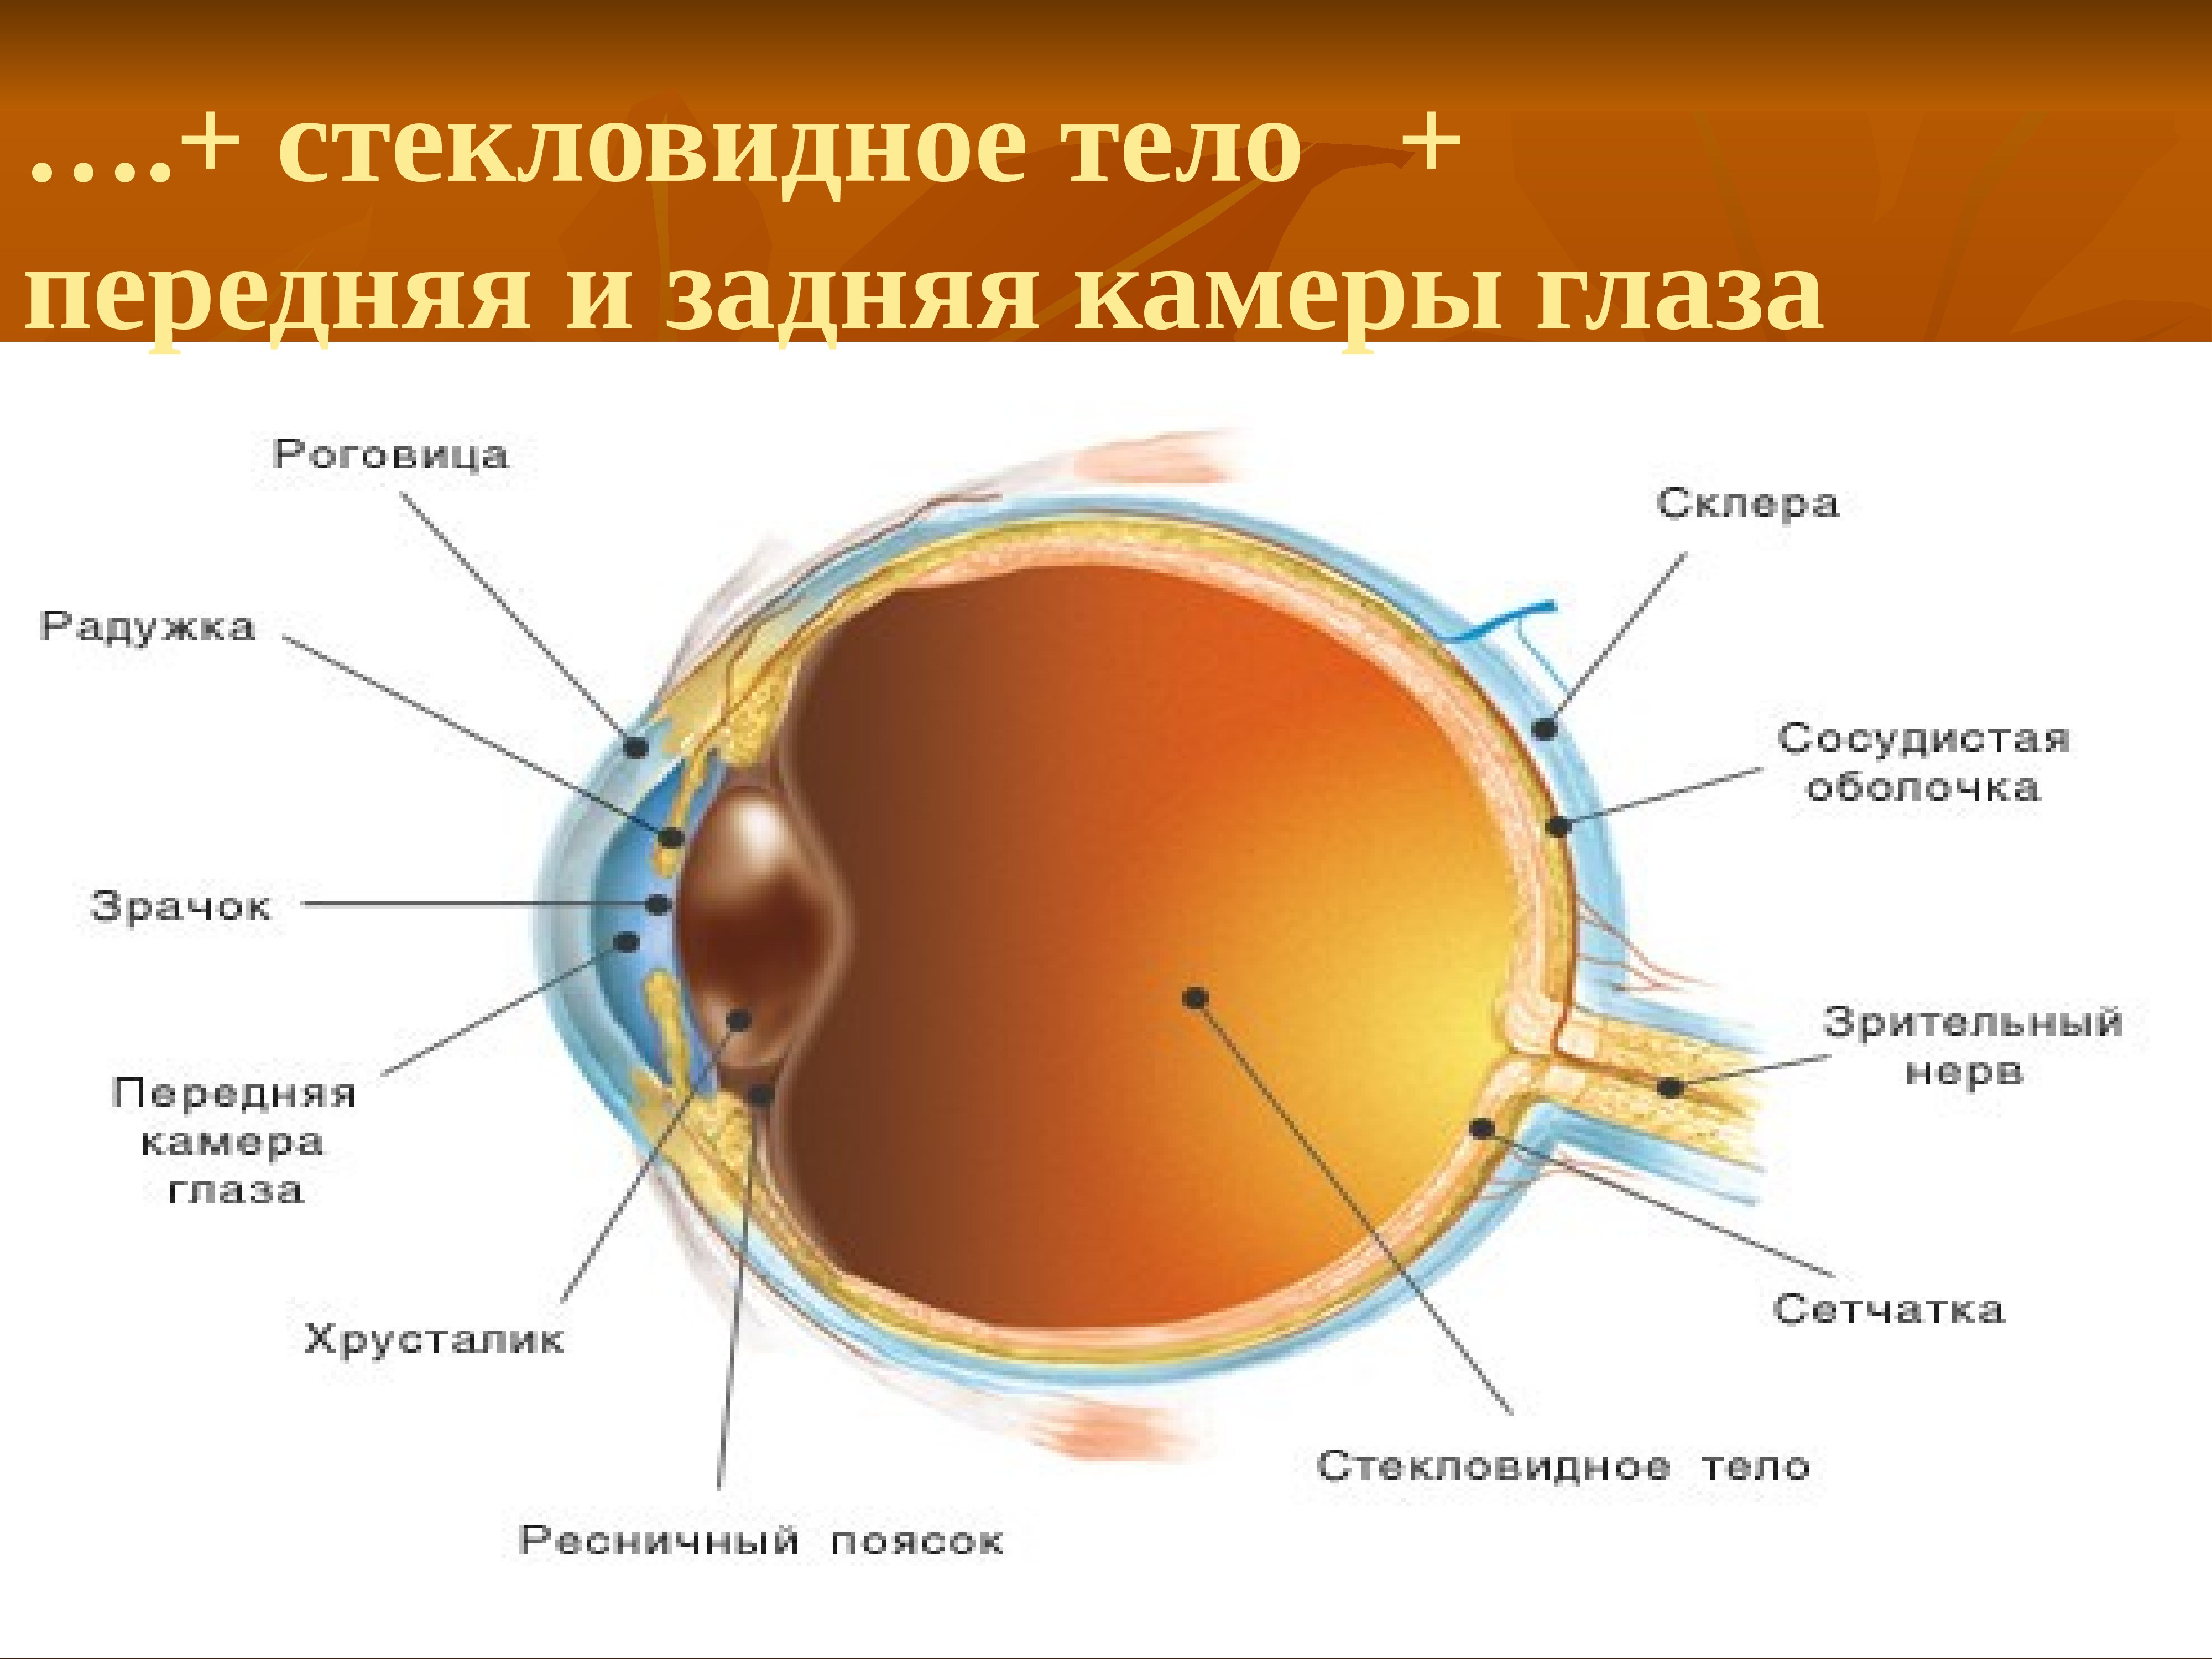 Оболочки глазного яблока у человека. Строение глаза роговица радужка. Строение глазного анализатора. Строение оптического аппарата зрительного анализатора. Внутренняя оболочка глаза сетчатка.